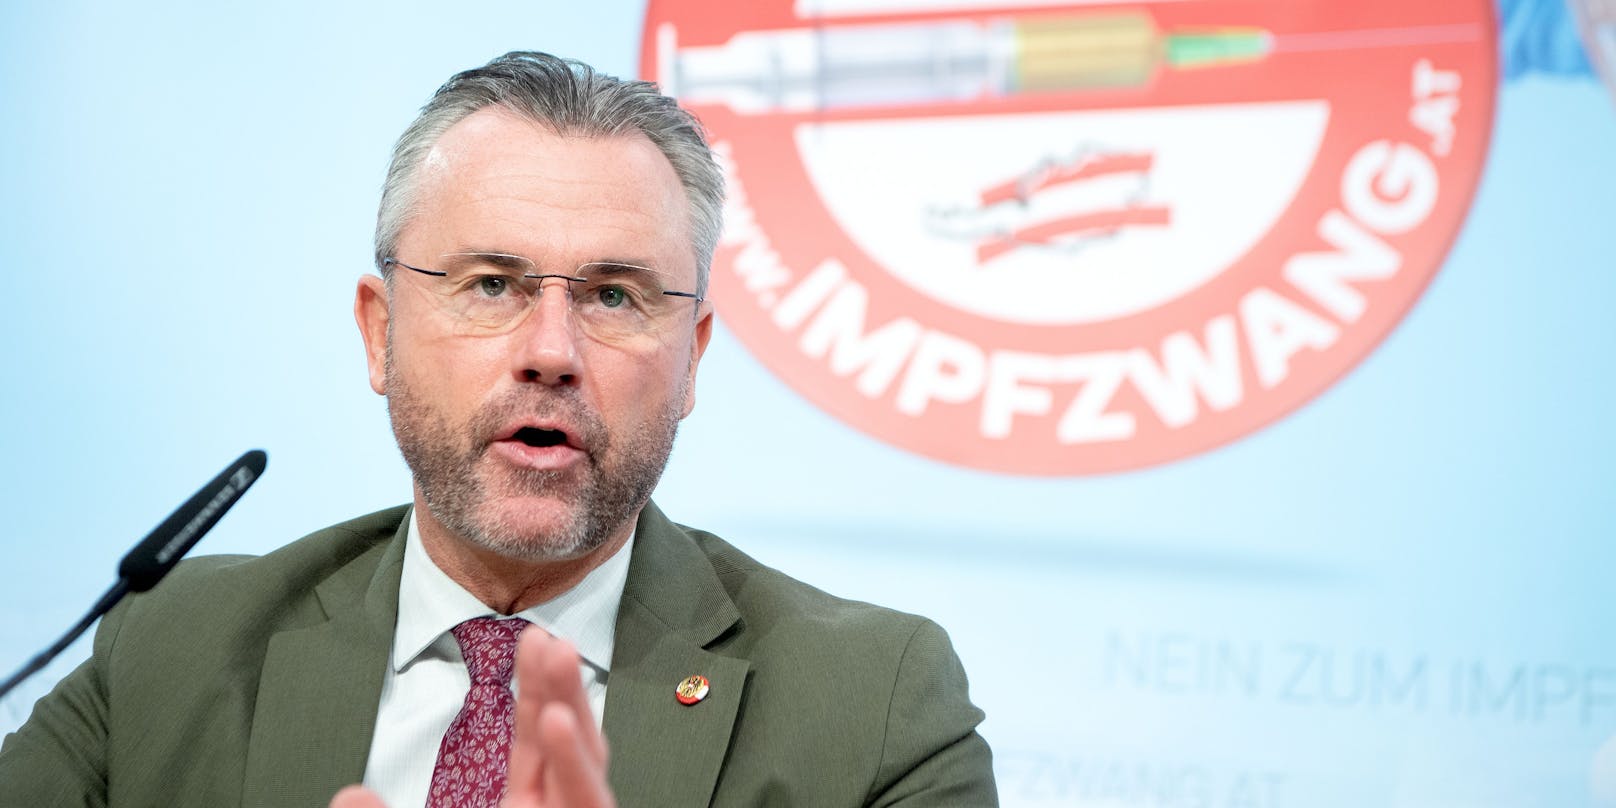 FPÖ-Chef Norbert Hofer